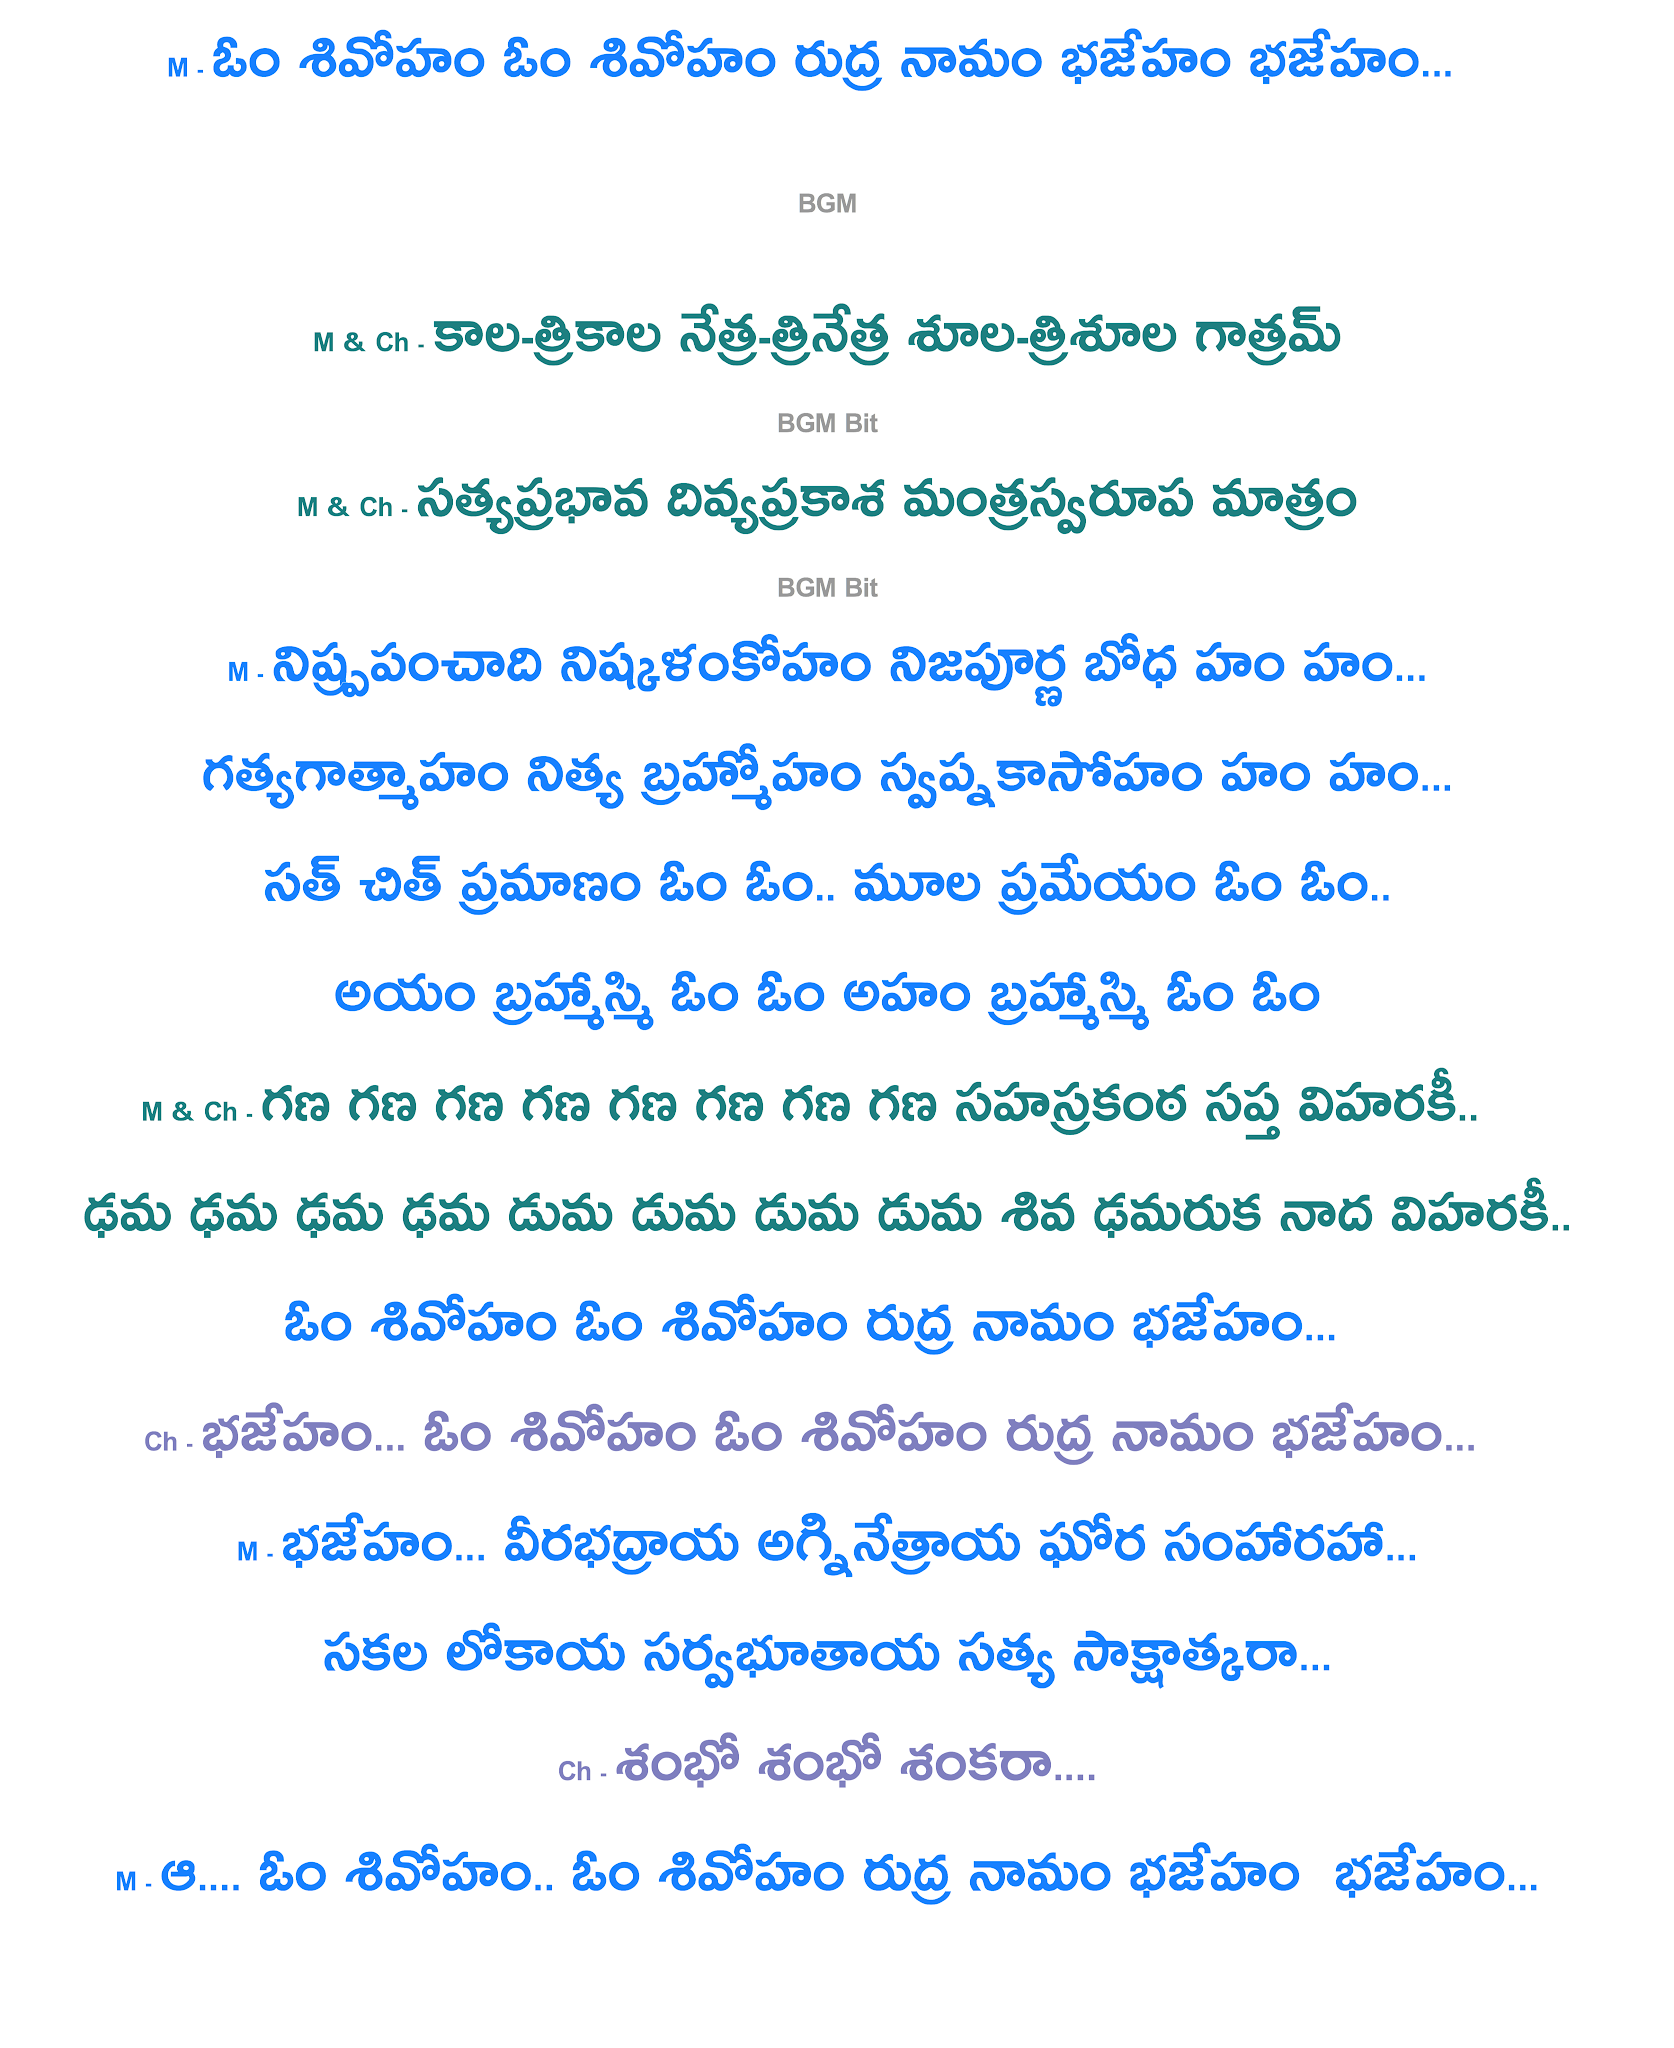 Chudaramma satulala song lyrics in telugu